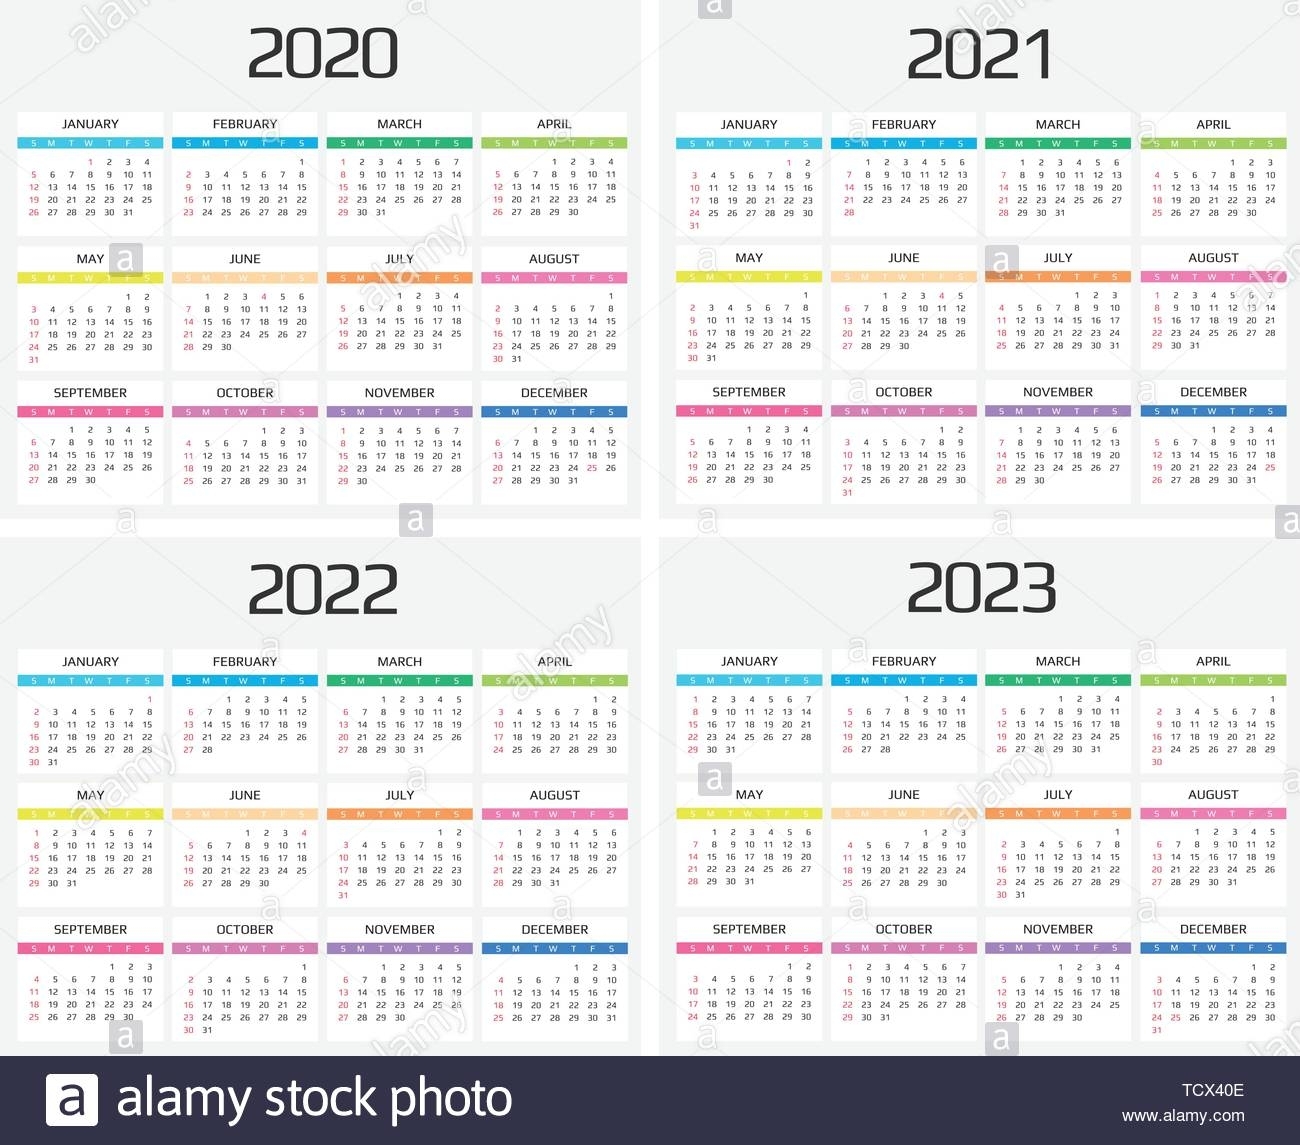 Calendar 2020, 2021, 2022, 2023 Template. 12 Months. Include